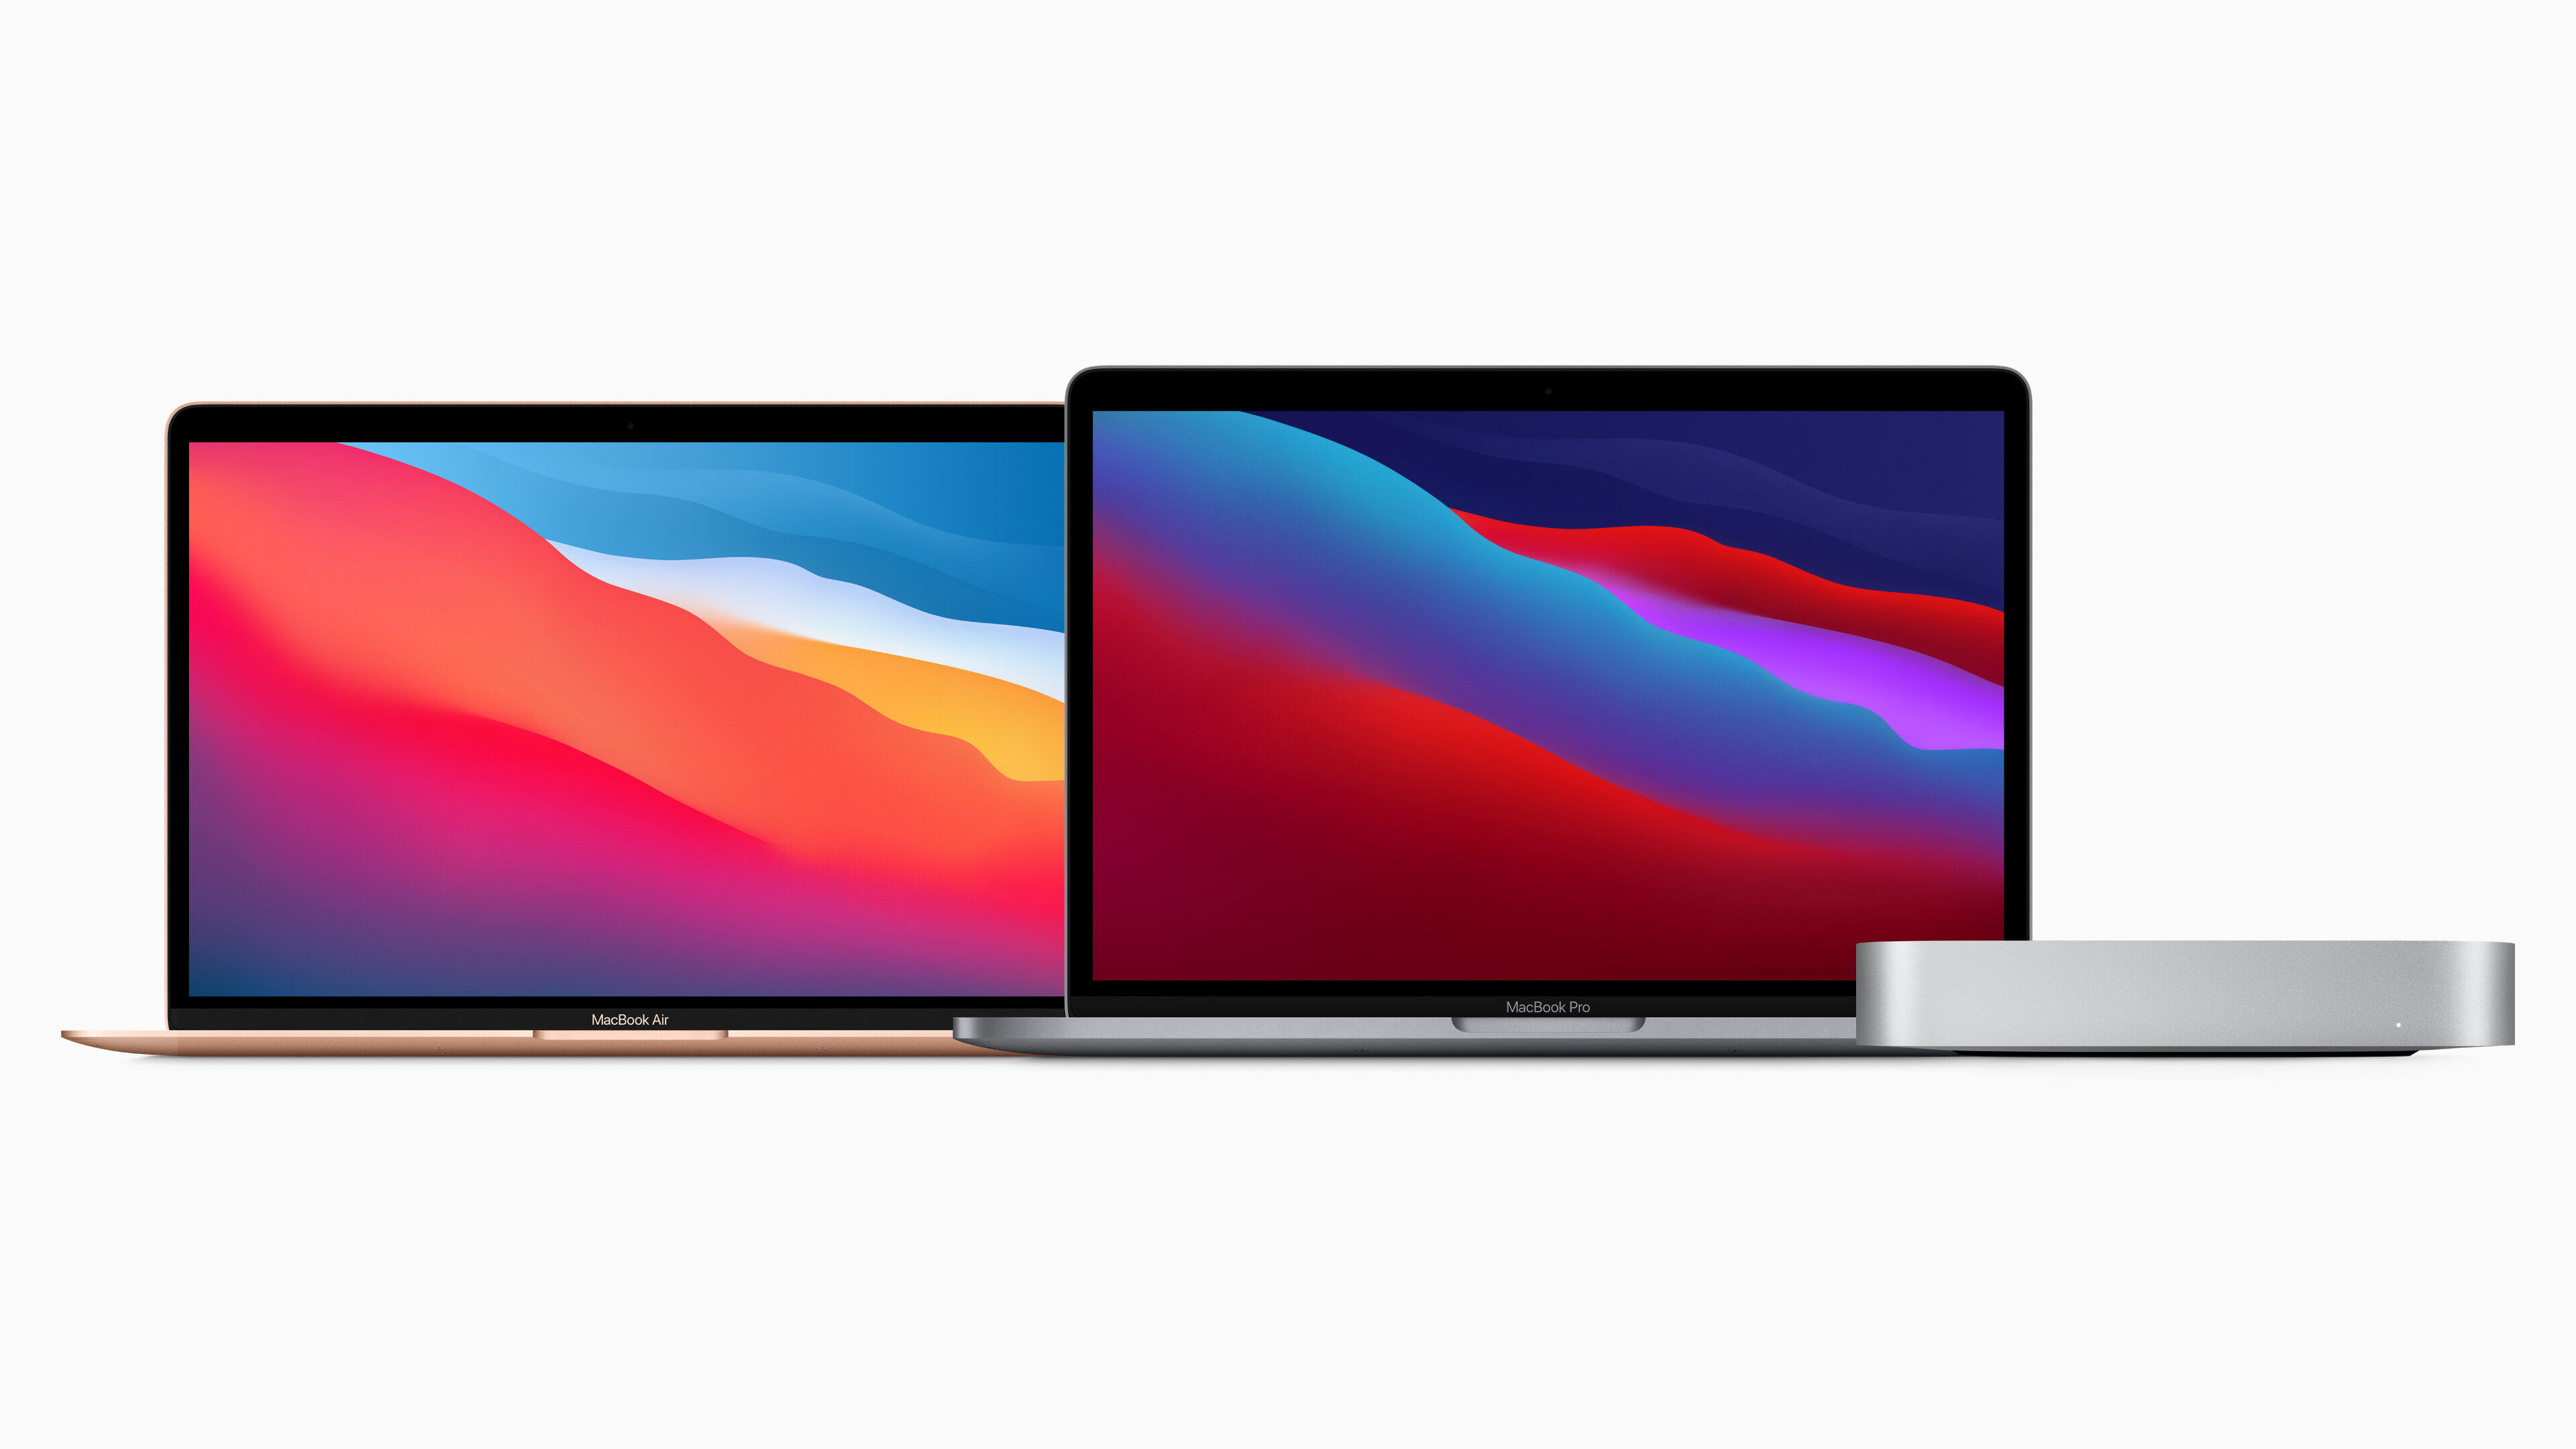 「MacBook Air」「MacBook Pro（13インチ）」新モデル 高速「M1」チップ搭載: J-CAST トレンド